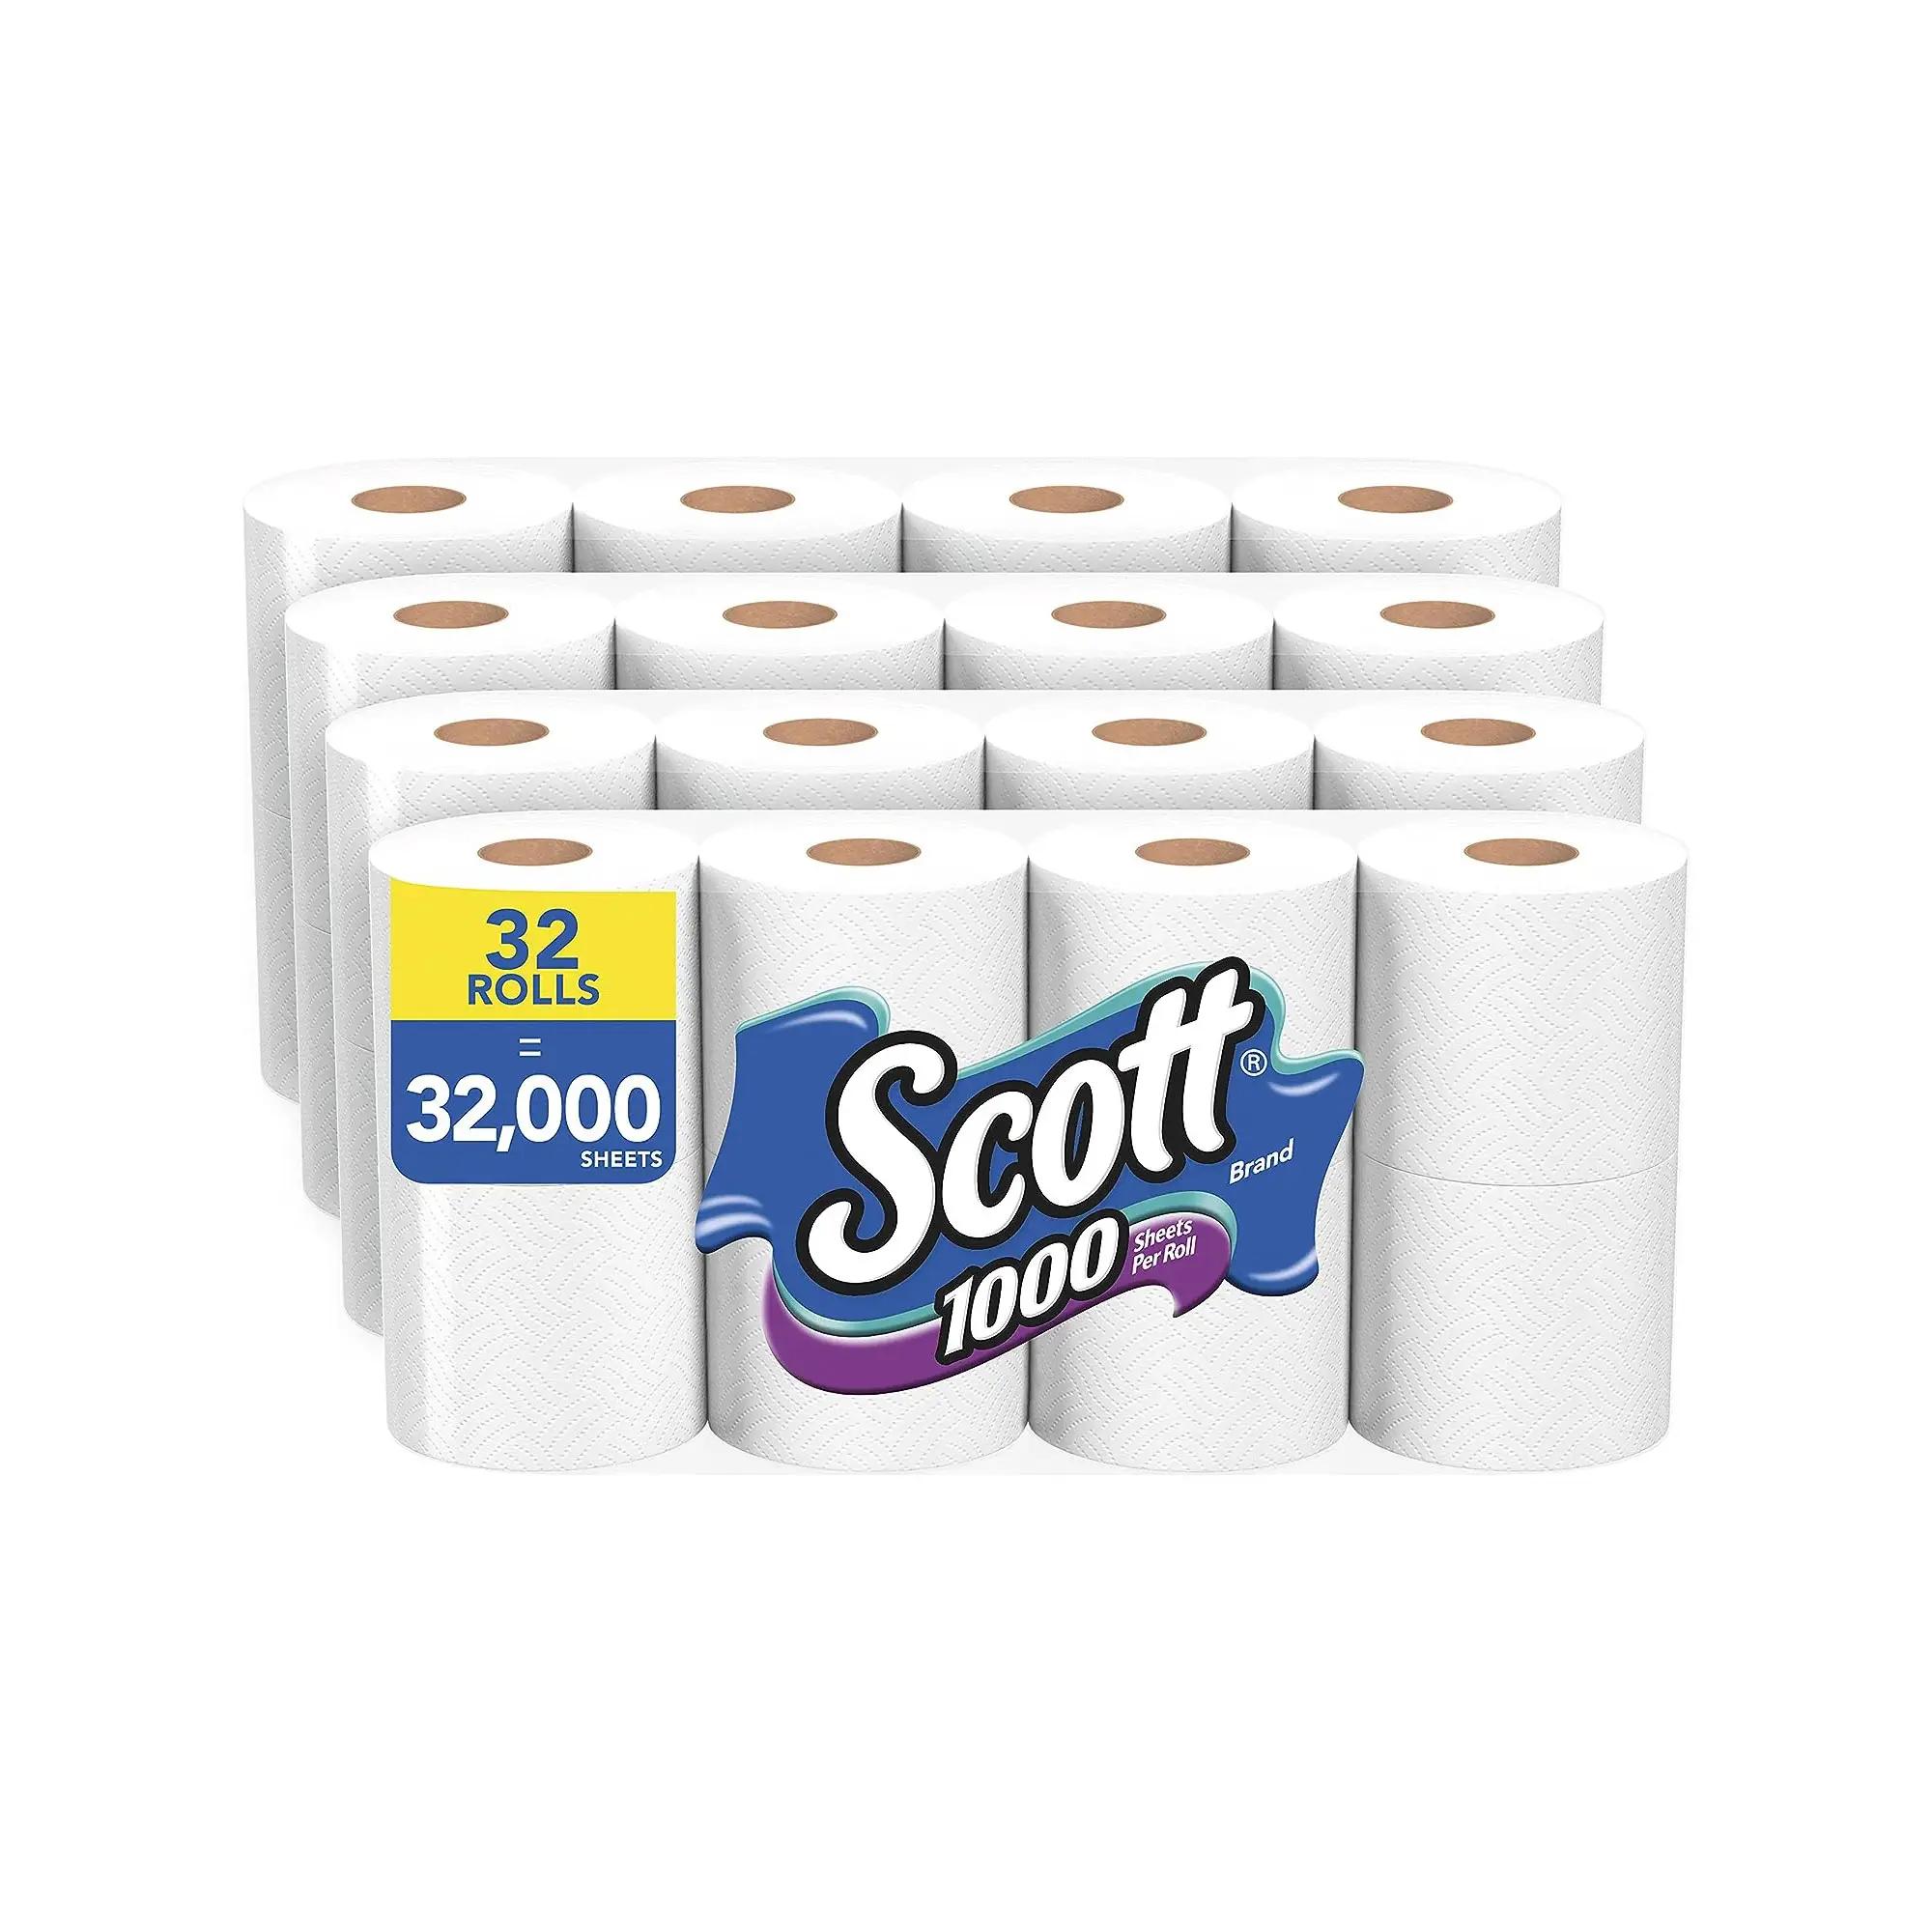 Scott 1000 Toilet Paper - 32 Rolls 1000 Sheets per Roll - Premium Bathroom Tissue Lasts Longer And Dissolves Faster